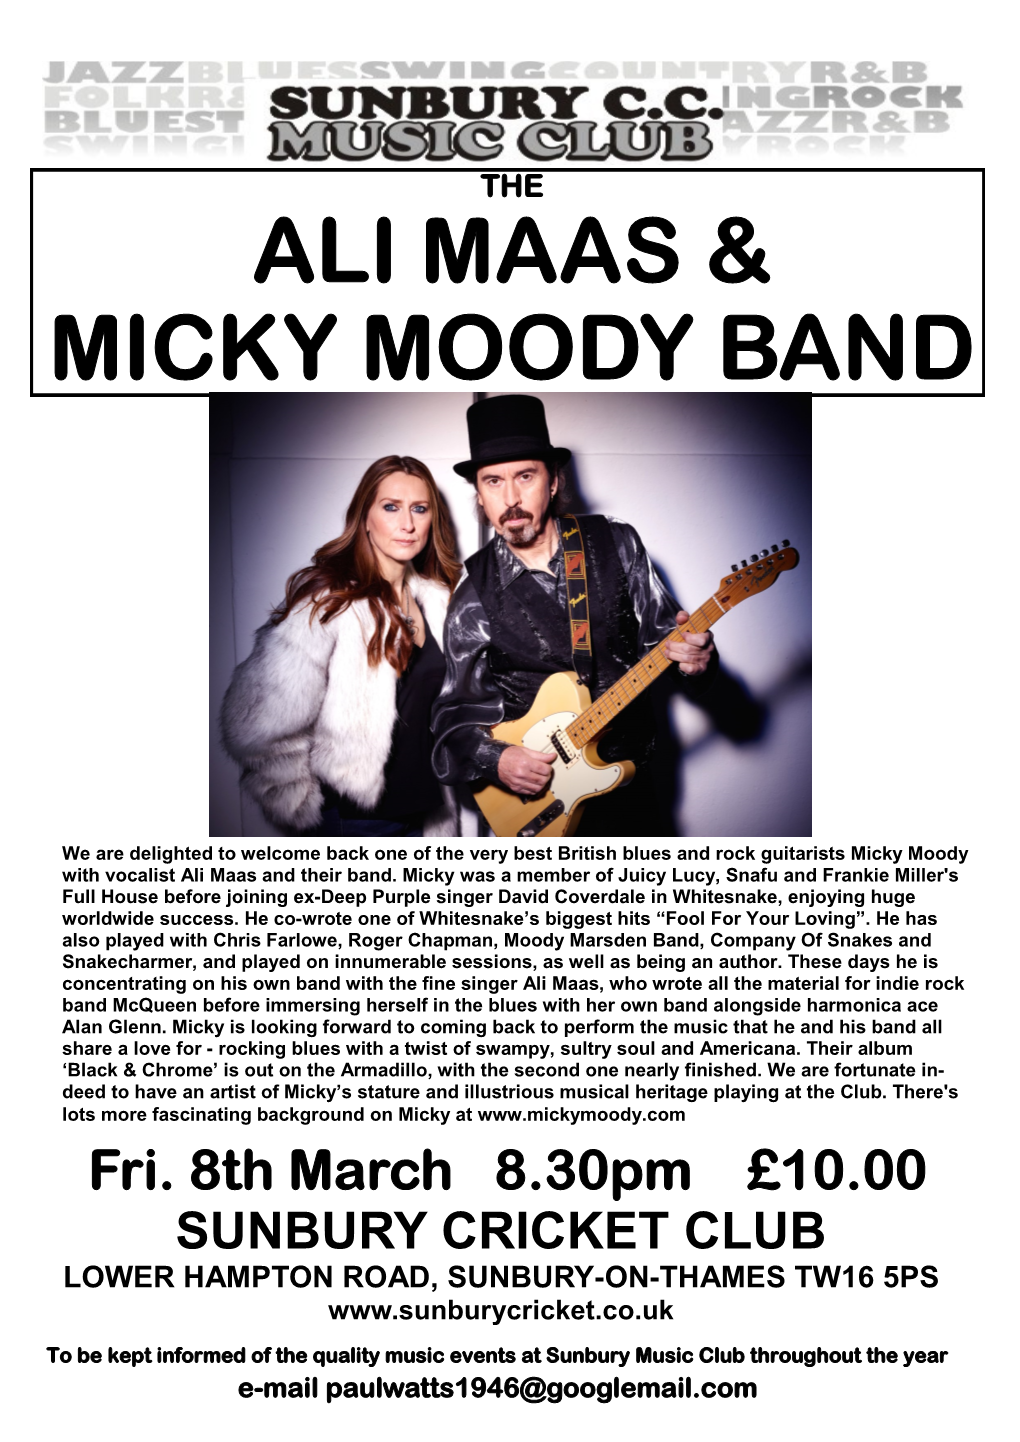 Ali Maas & Micky Moody Band